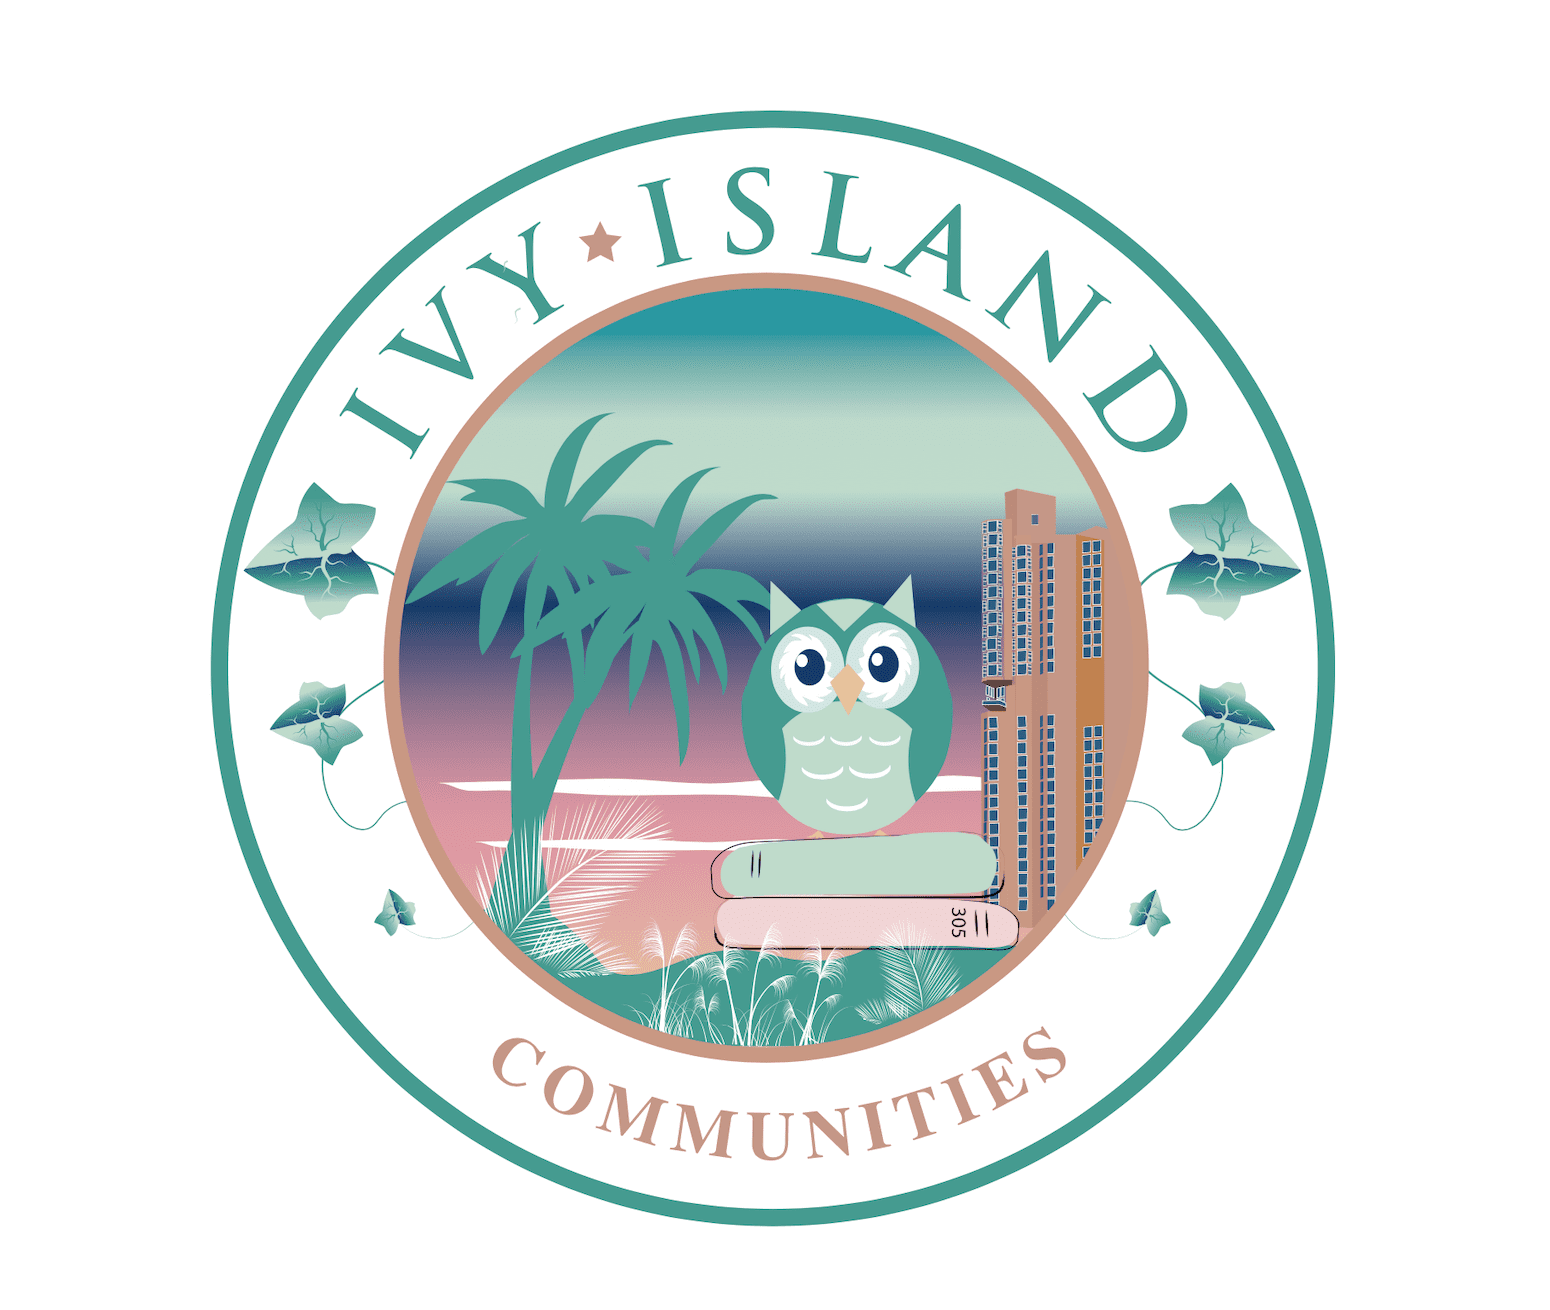 Ivy-Island-Communities-Official-Logo